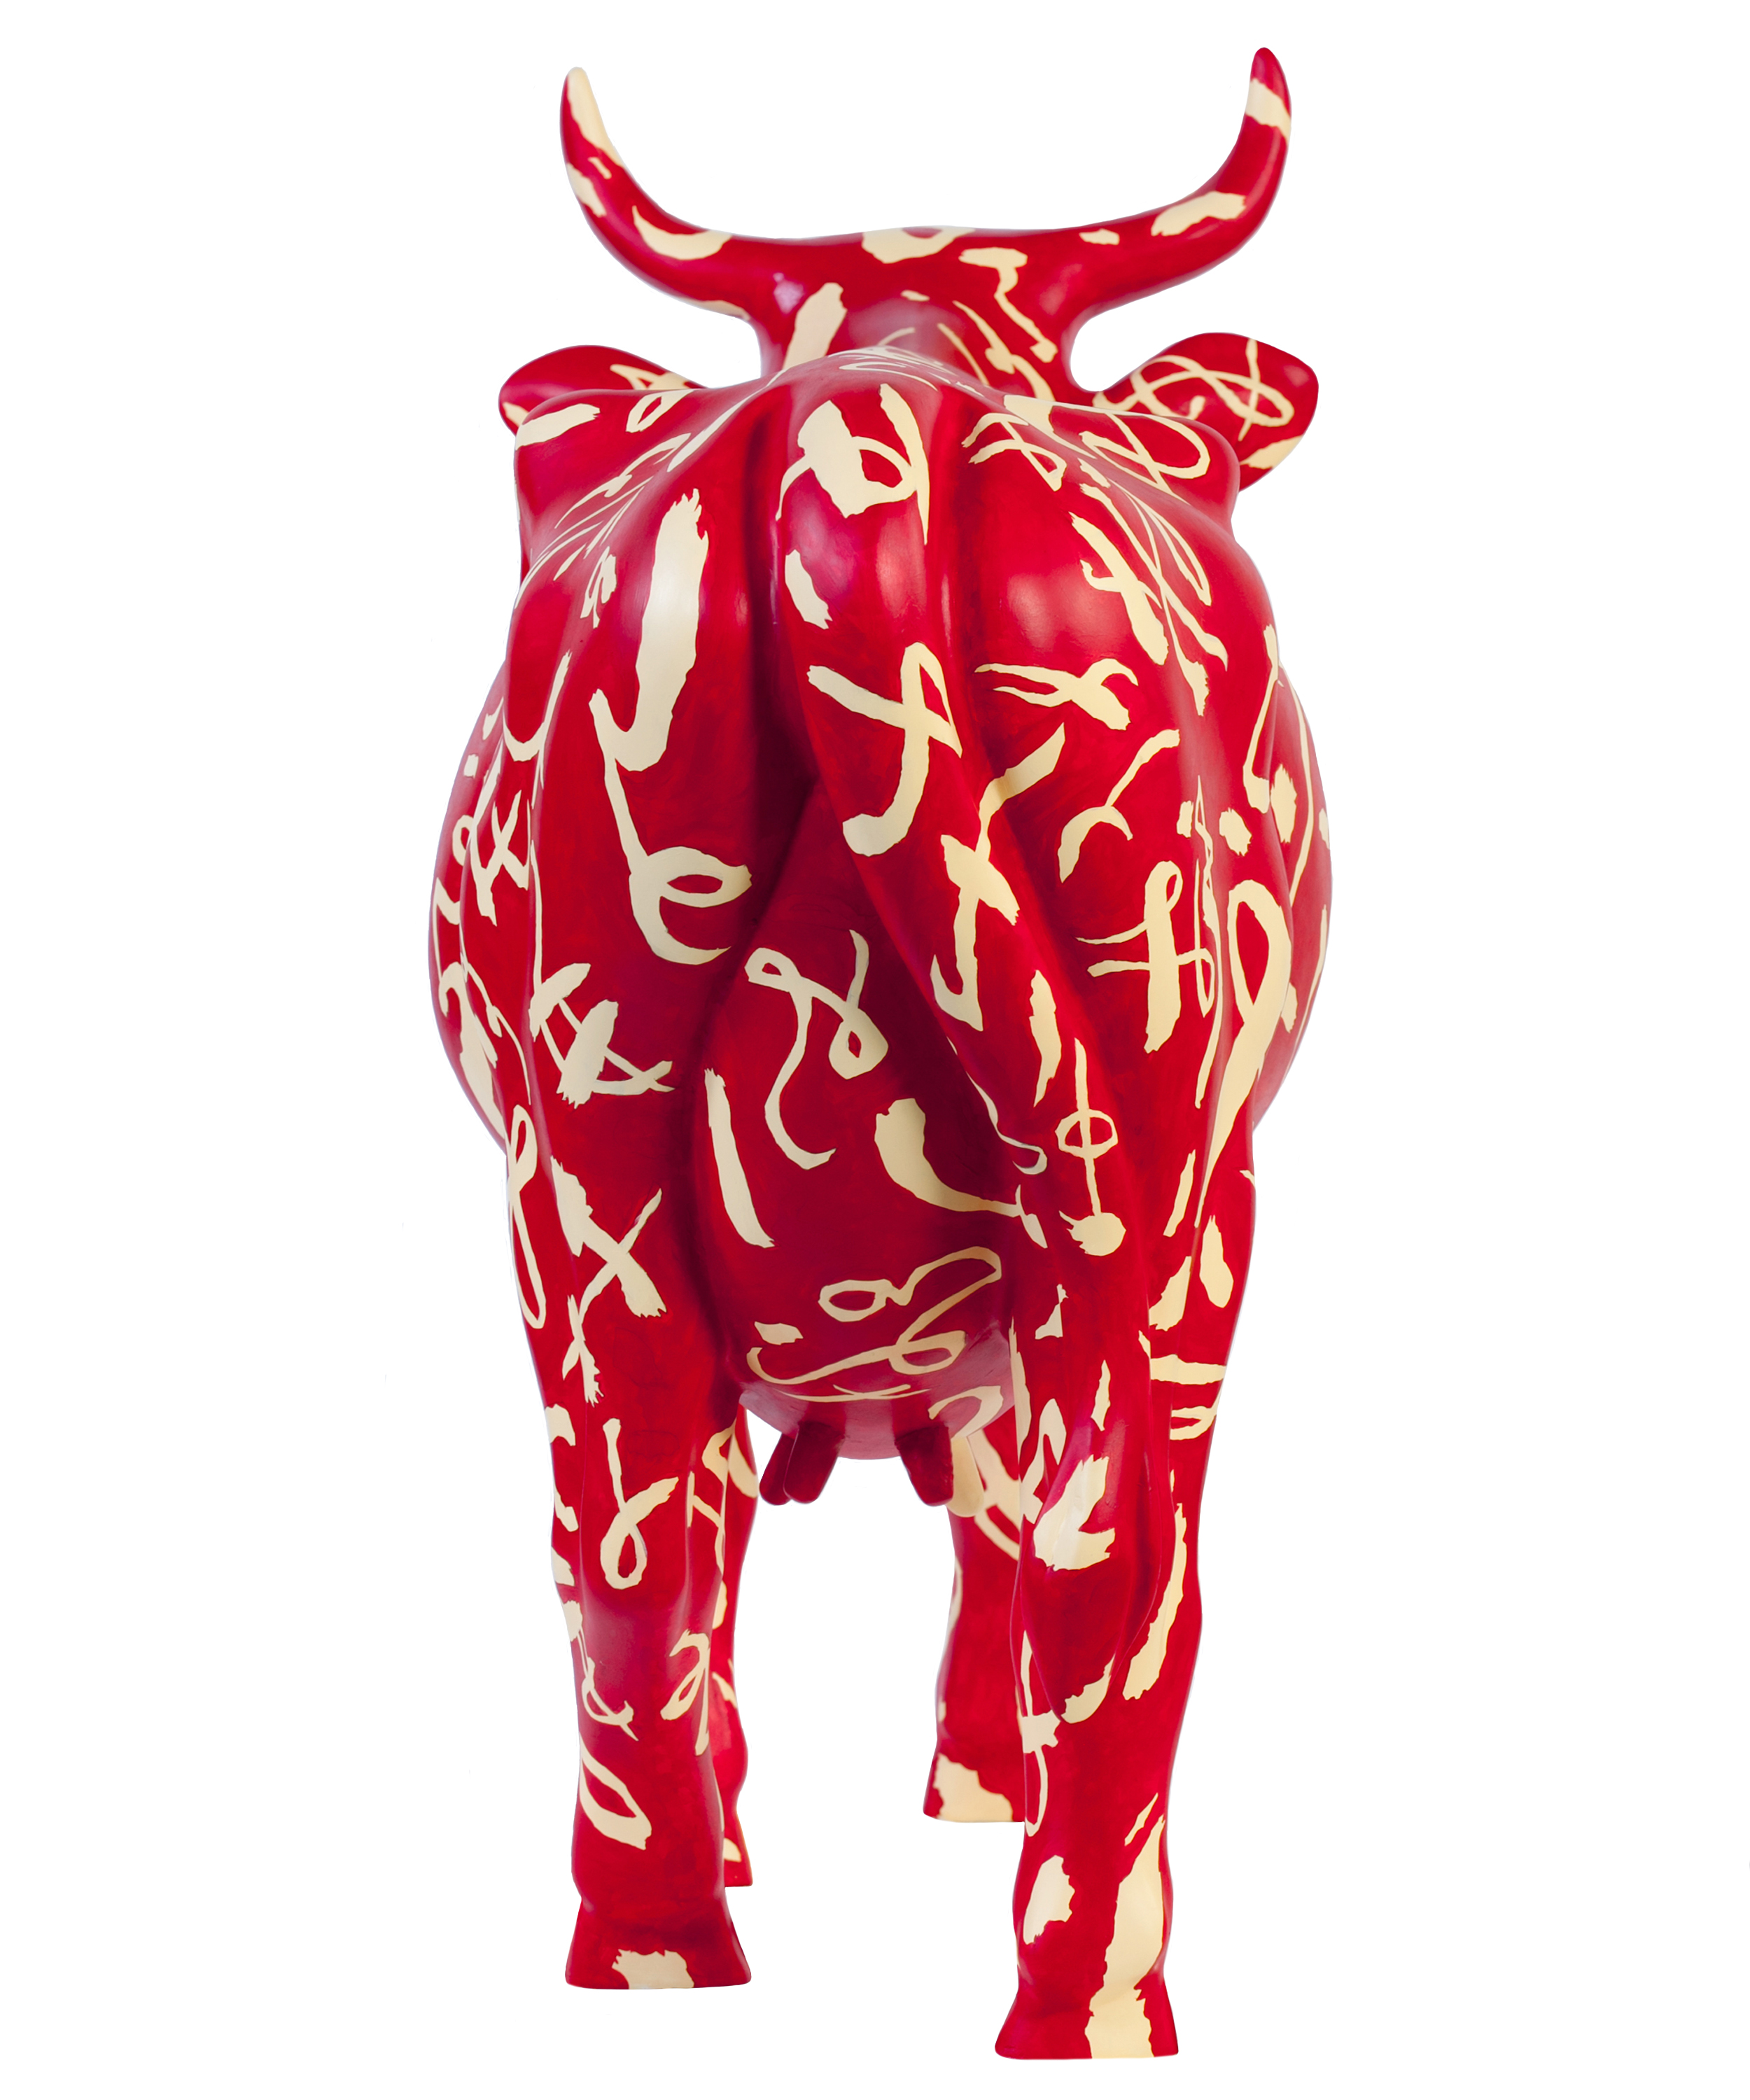 Shodou Ushi, Austin Cow Parade Painted Sculpture